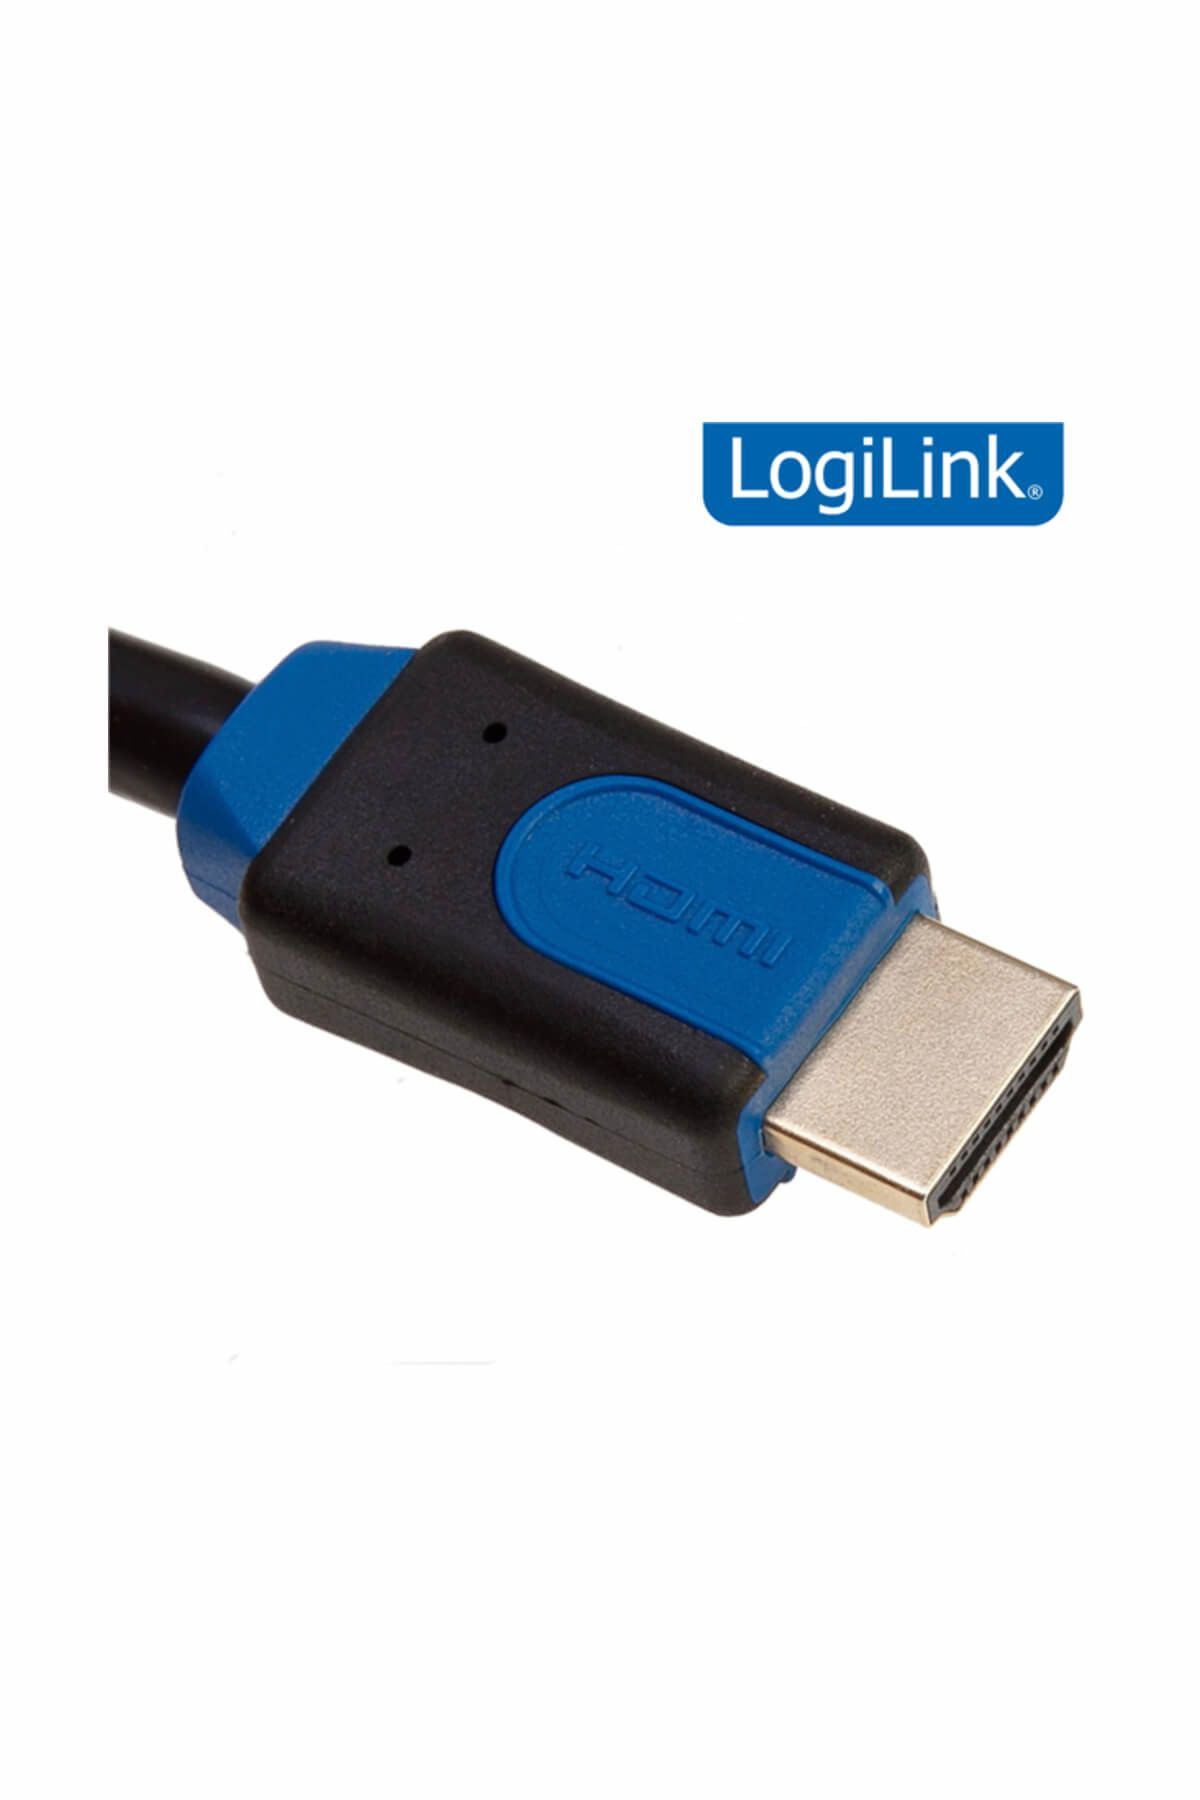 LogiLink CHB3102 Çift Yönlü HDMI - DVI Kablo, Erkek - Erkek, 2.0m